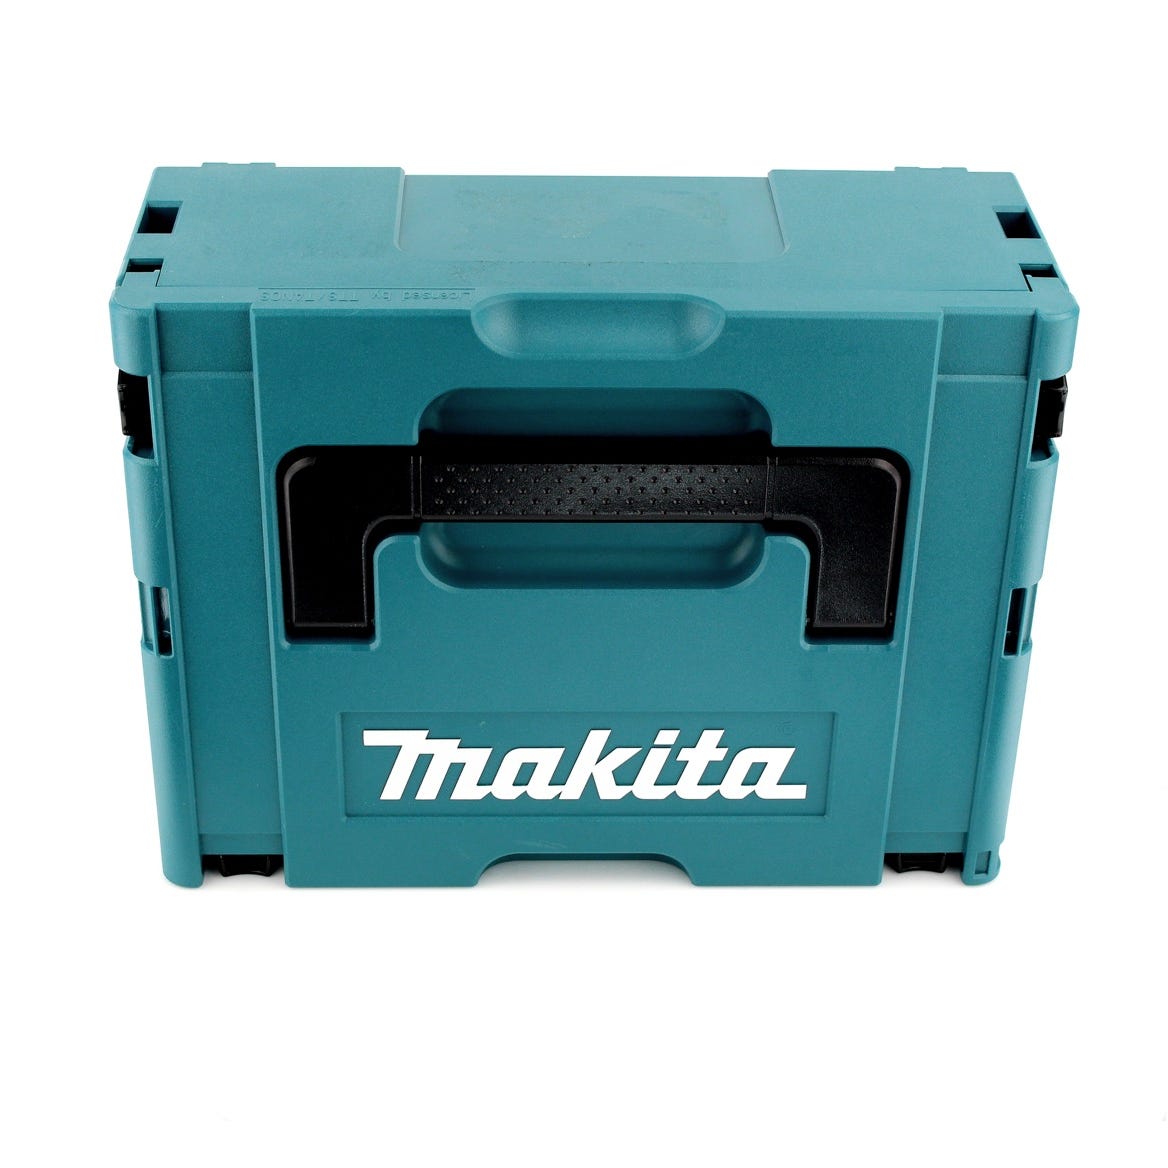 Makita DJR 188 ZJ 18 V Brushless Li-ion Scie récipro sans fil avec Coffret de transport Makpac - sans Batterie - ni Chargeur 3